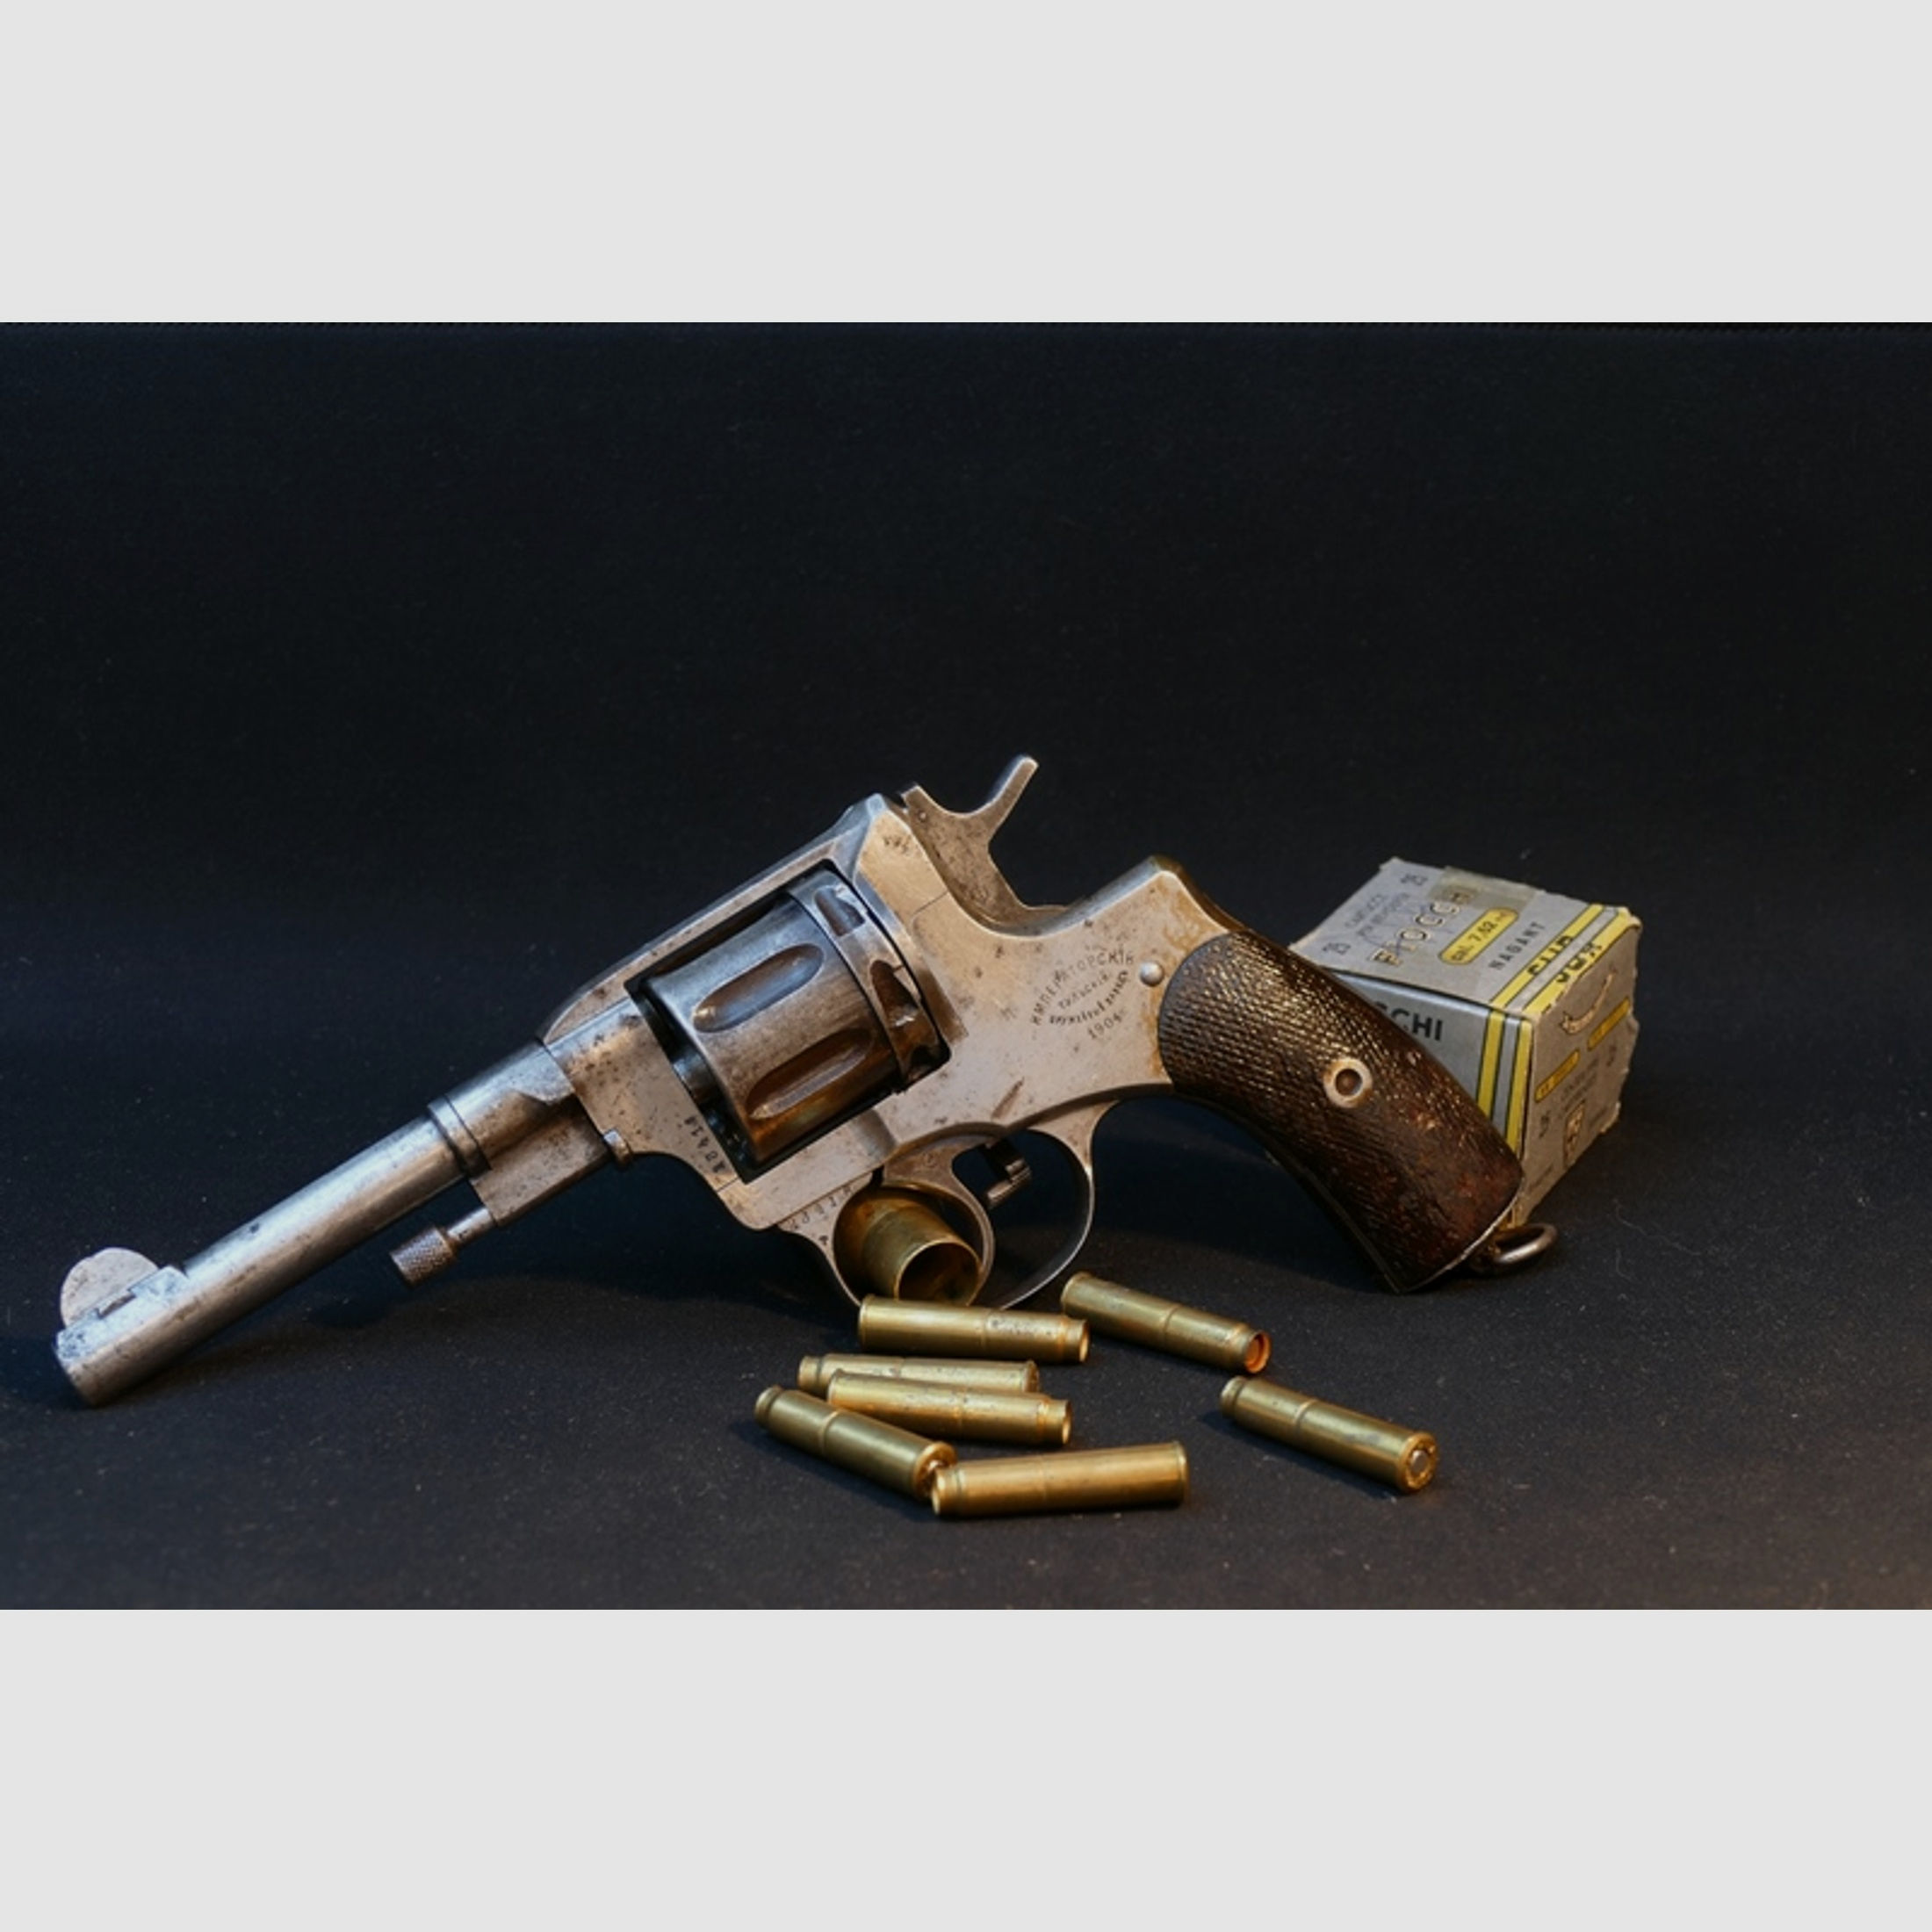 Nagant Revolver, M1895 kurz, Bj. 1904, Tula Arsenal, 7,62Nagant, WWK, Sammler, Ordonnanz